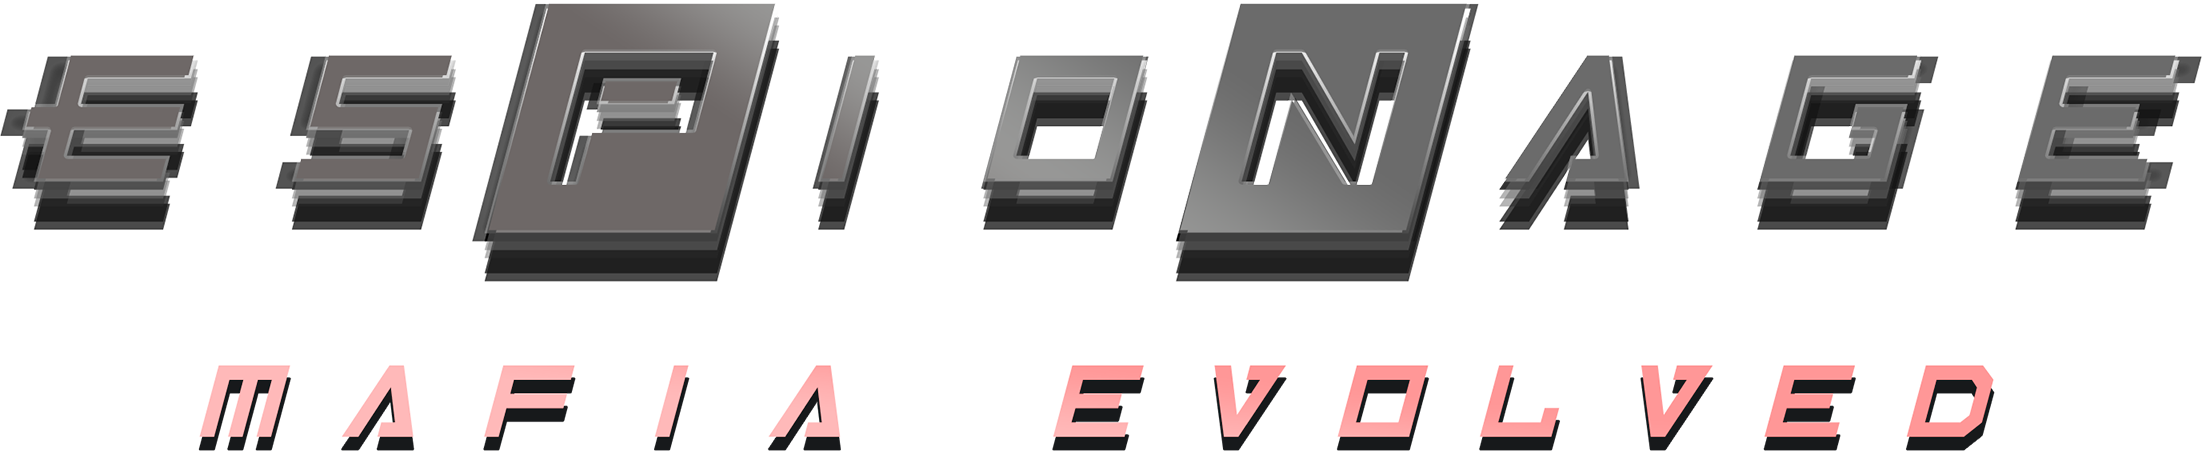 ESPIONAGE: Mafia Evolved Logo